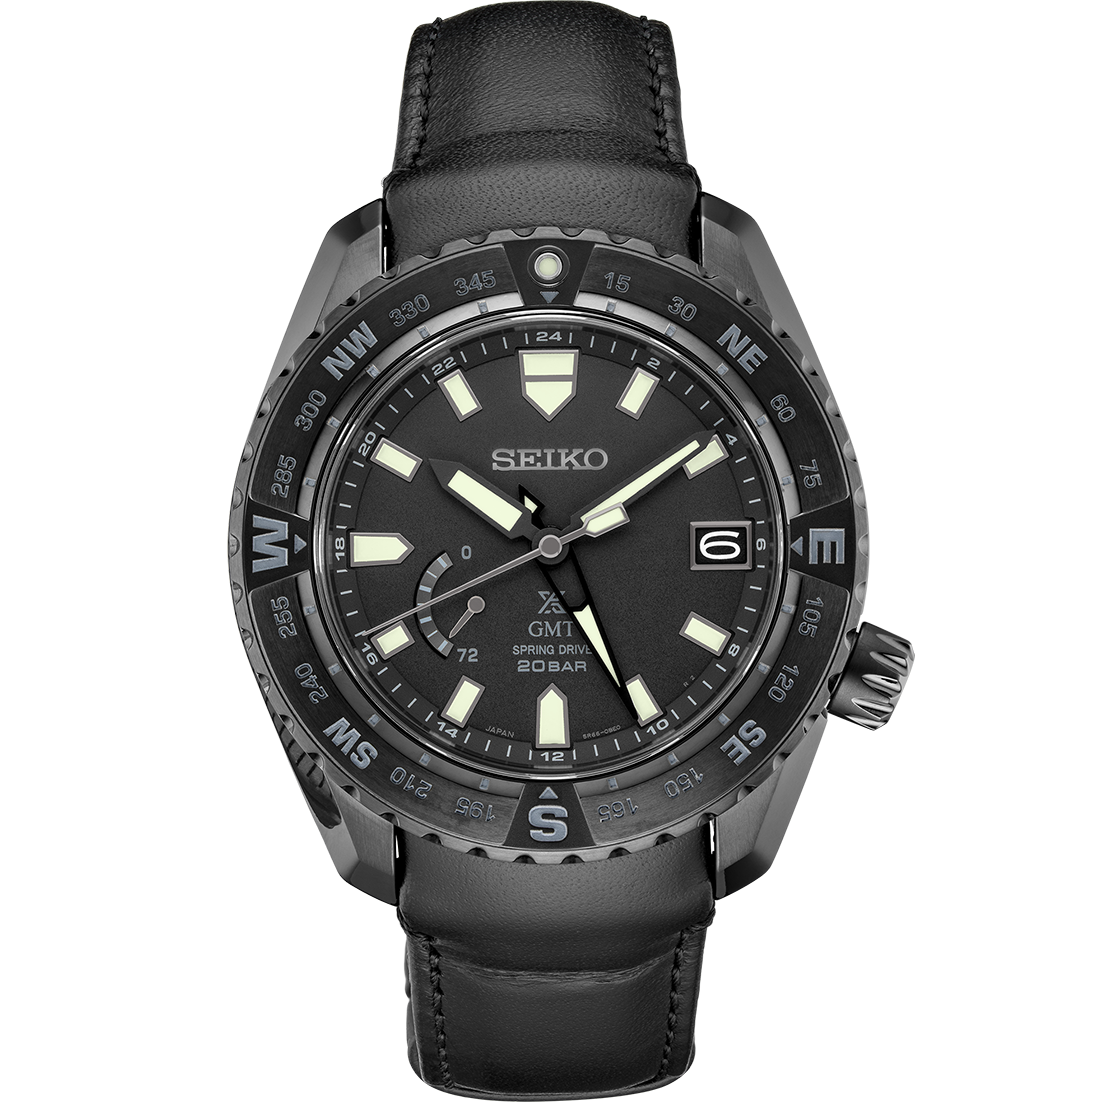 Seiko Prospex LX SNR027 Spring Drive GMT Automatic Watch